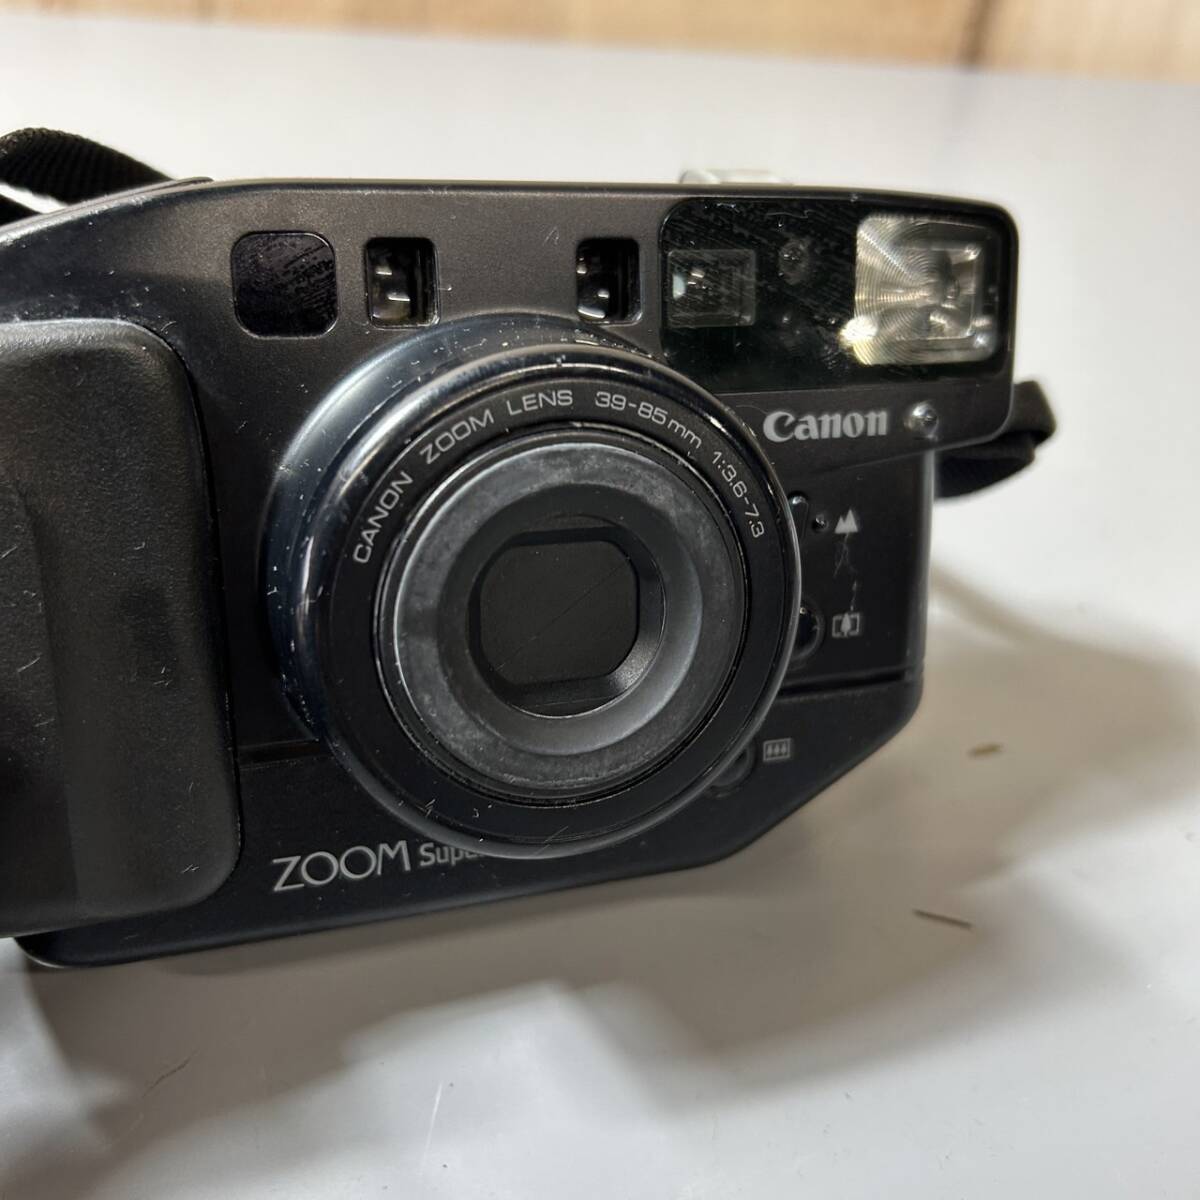 ☆Canon キャノン Autoboy ZOOM SUPER フィルムカメラ コンパクトカメラ Canon ZOOM LENS MF 39-85mm F=1:3.6-7.3(中古品/現状品/保管品)☆の画像2